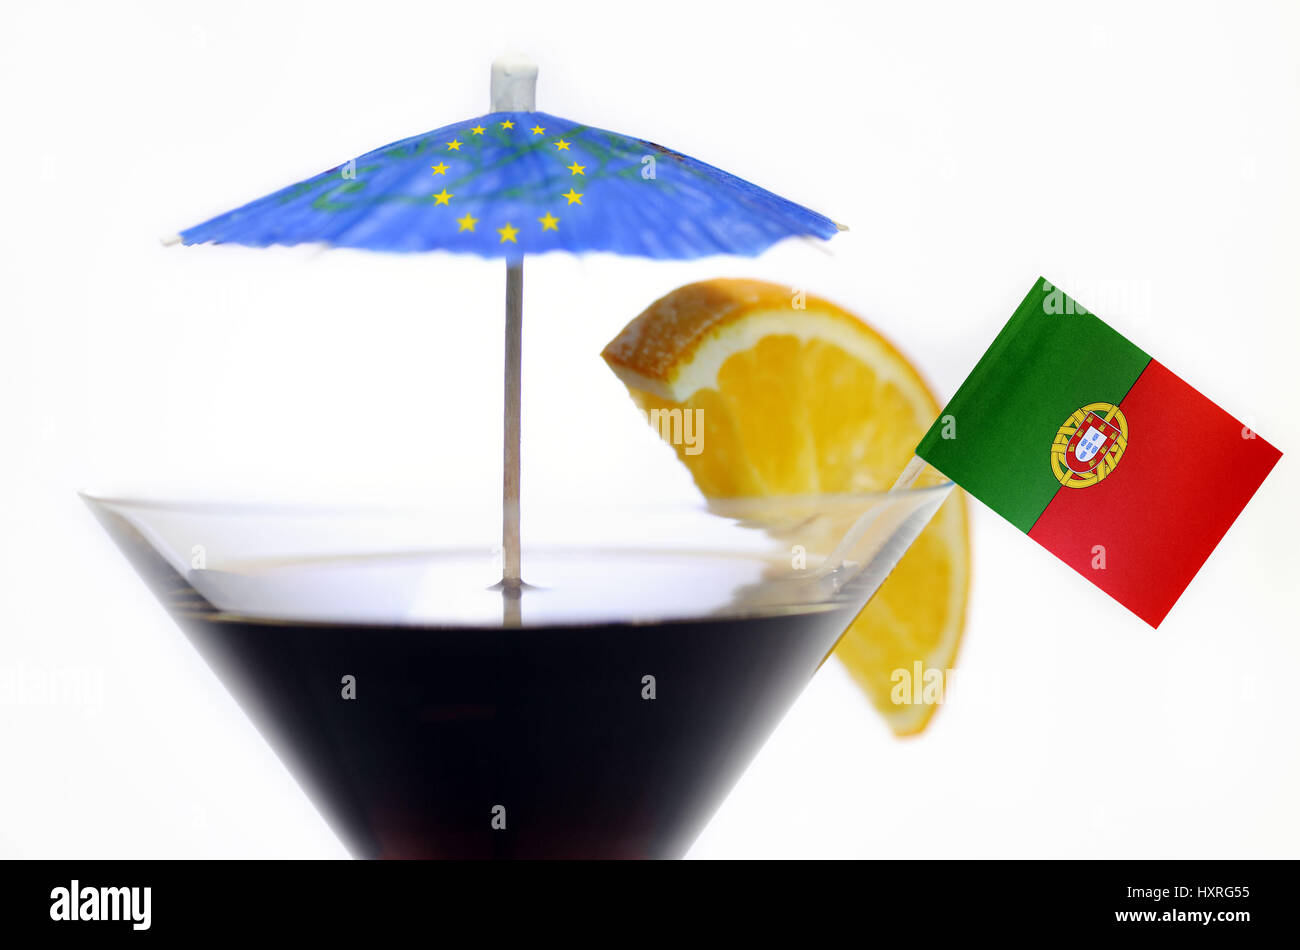 Cocktail glass with EU-rescue screen and Portugal flag, Cocktailglas mit EU-Rettungsschirm und Portugal-Fahne Stock Photo